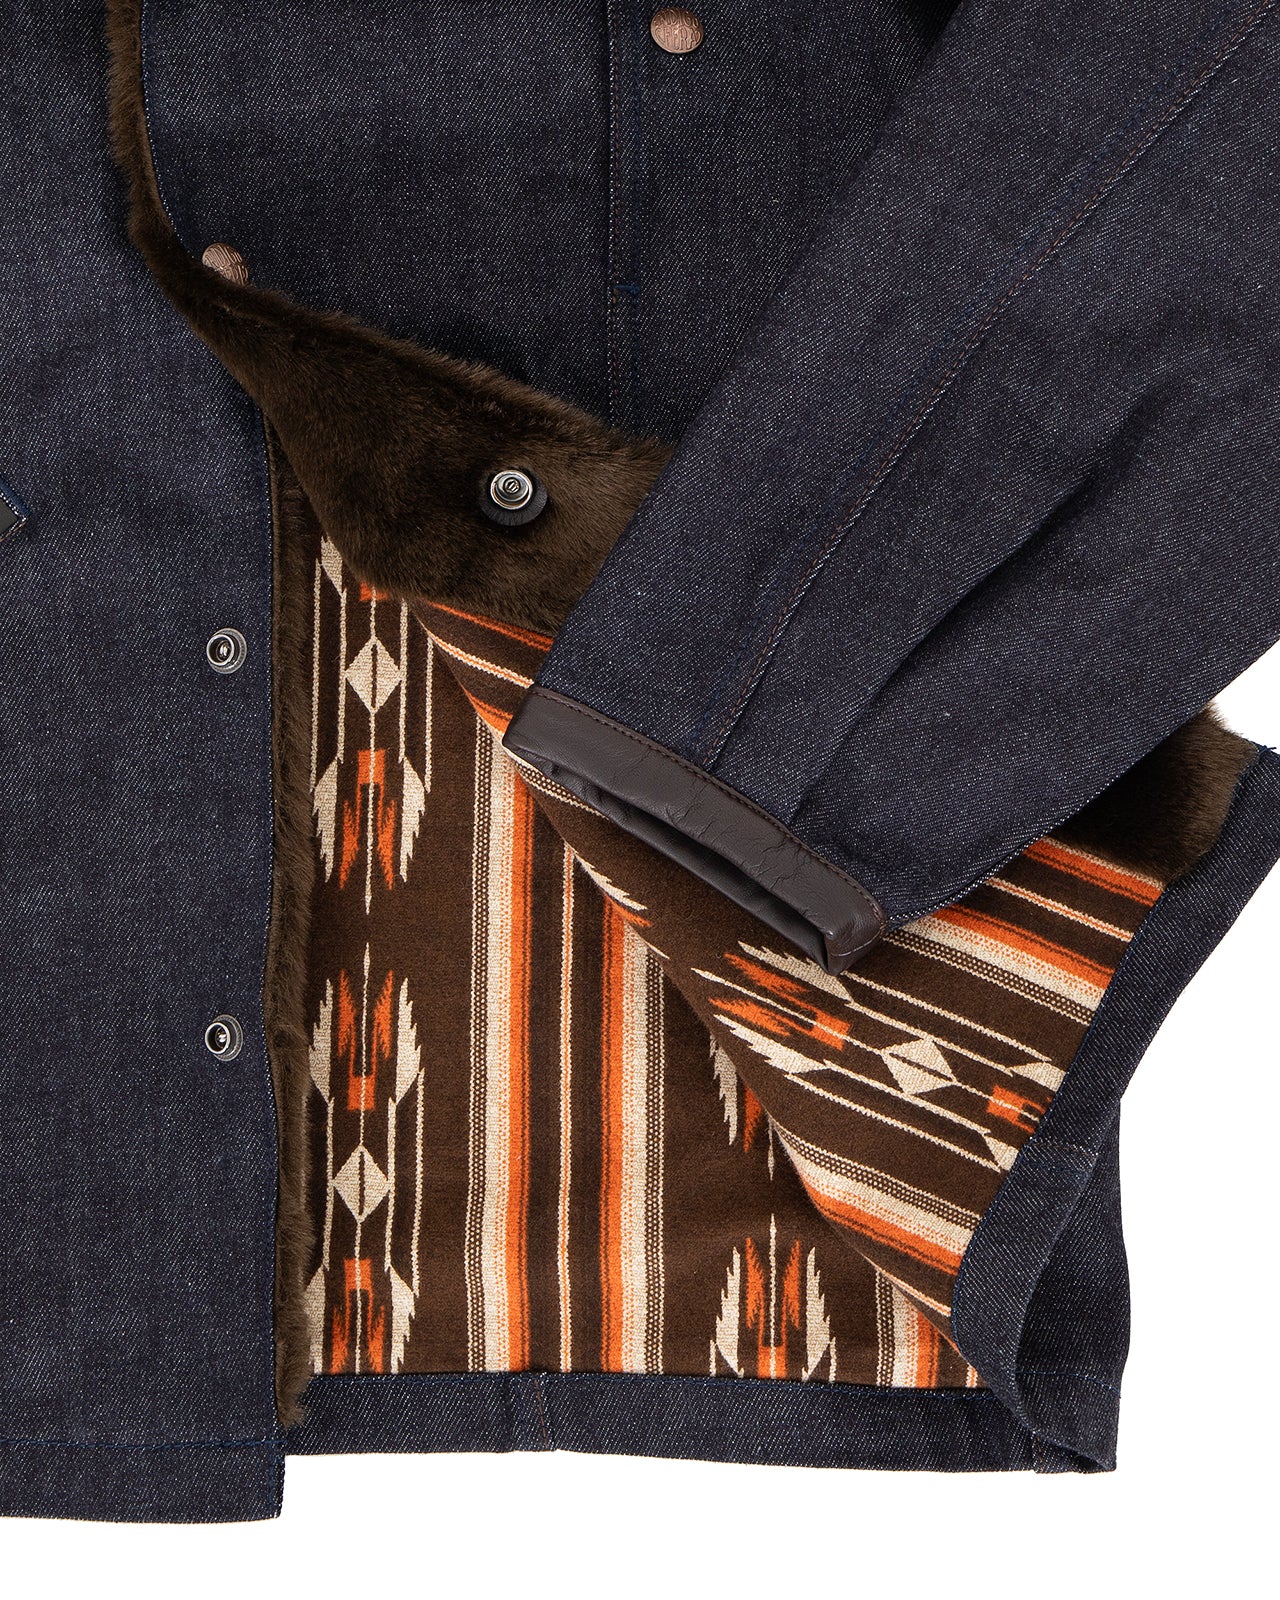 Indigofera Ranch Jacket, No 9 Fabric